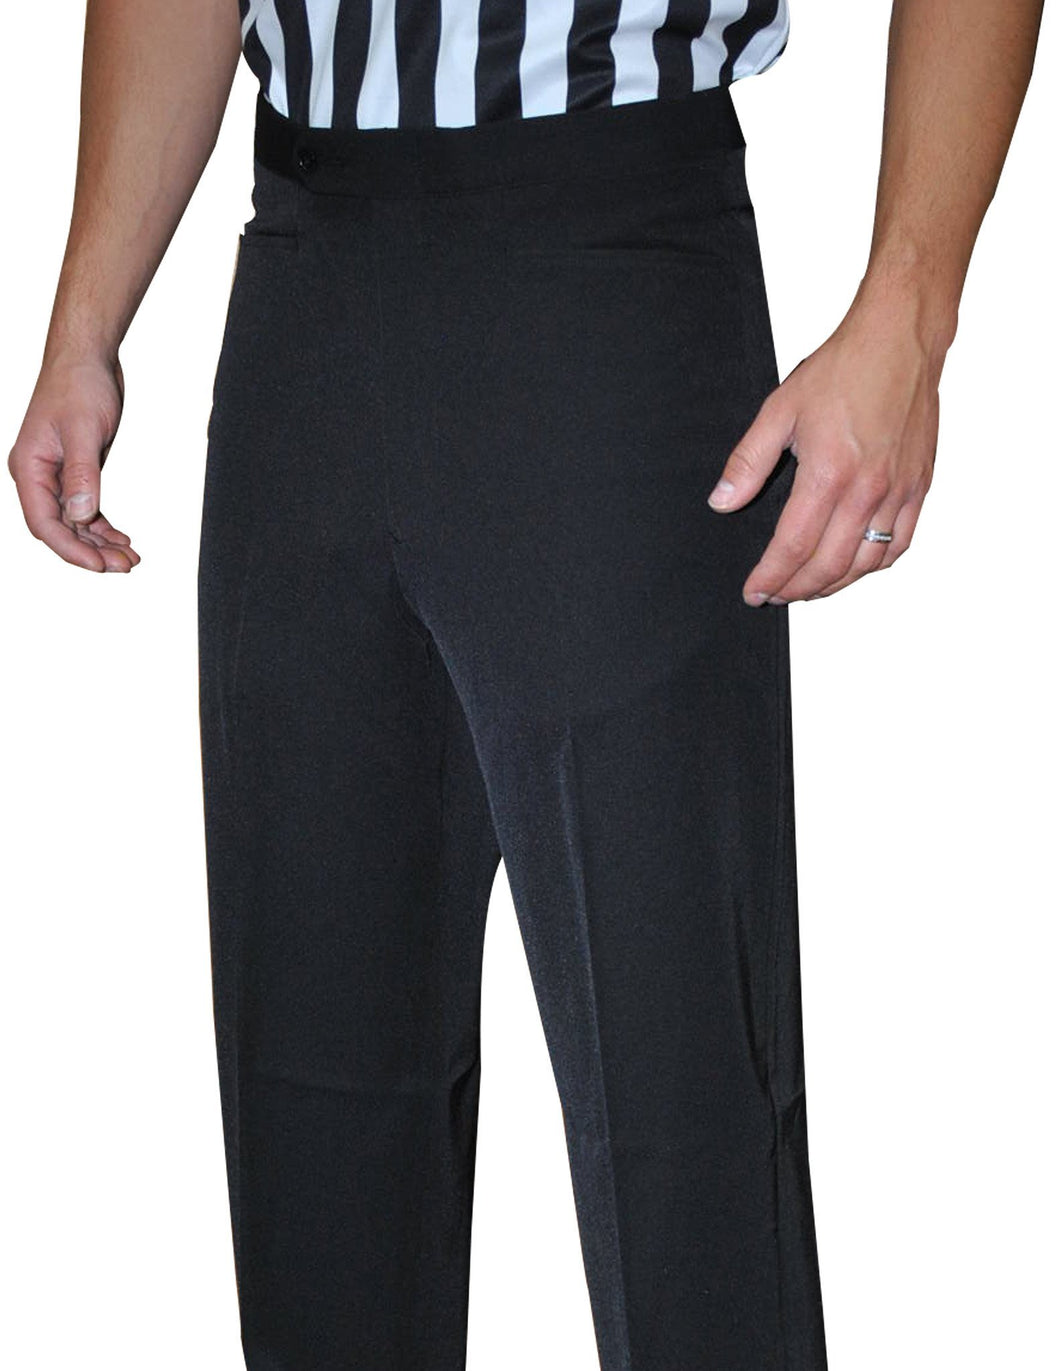 4-Way Stretch Black Flat Front Pants w/ Western Cut Pockets